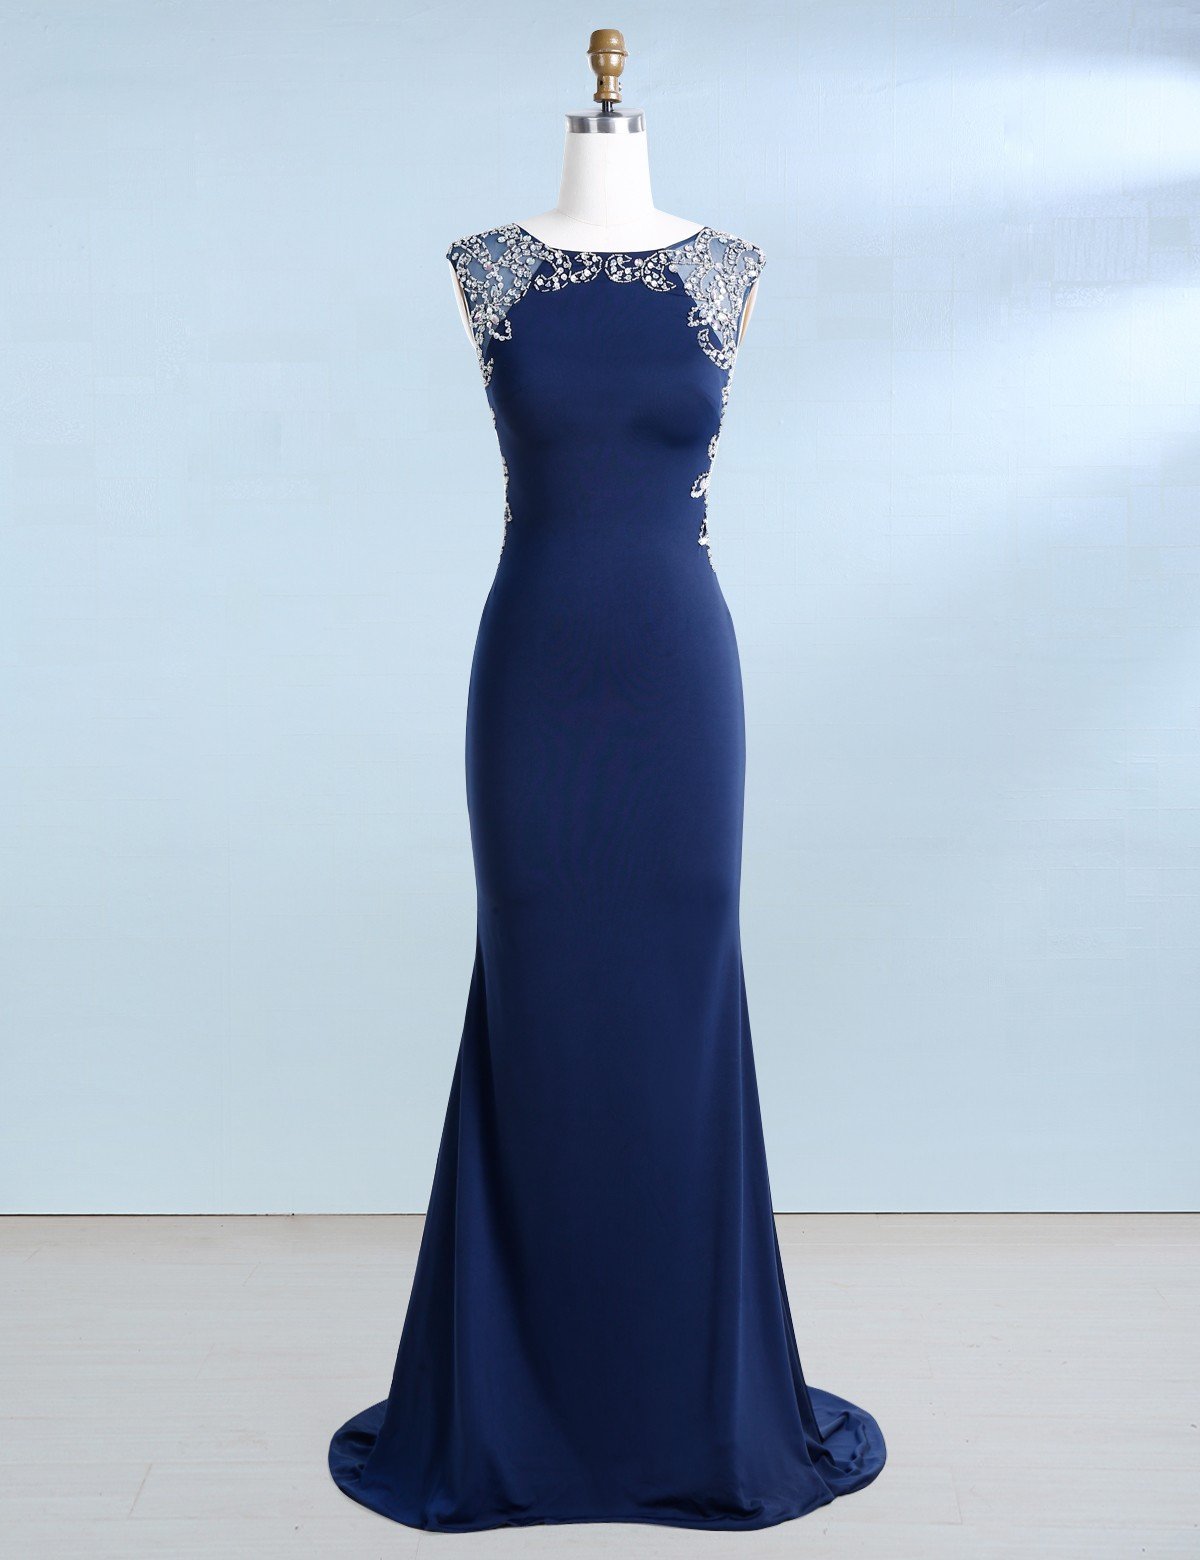 Sheath Bateau Illusion Back Elastic Satin Prom Dress With Beading Sequins,dr9567